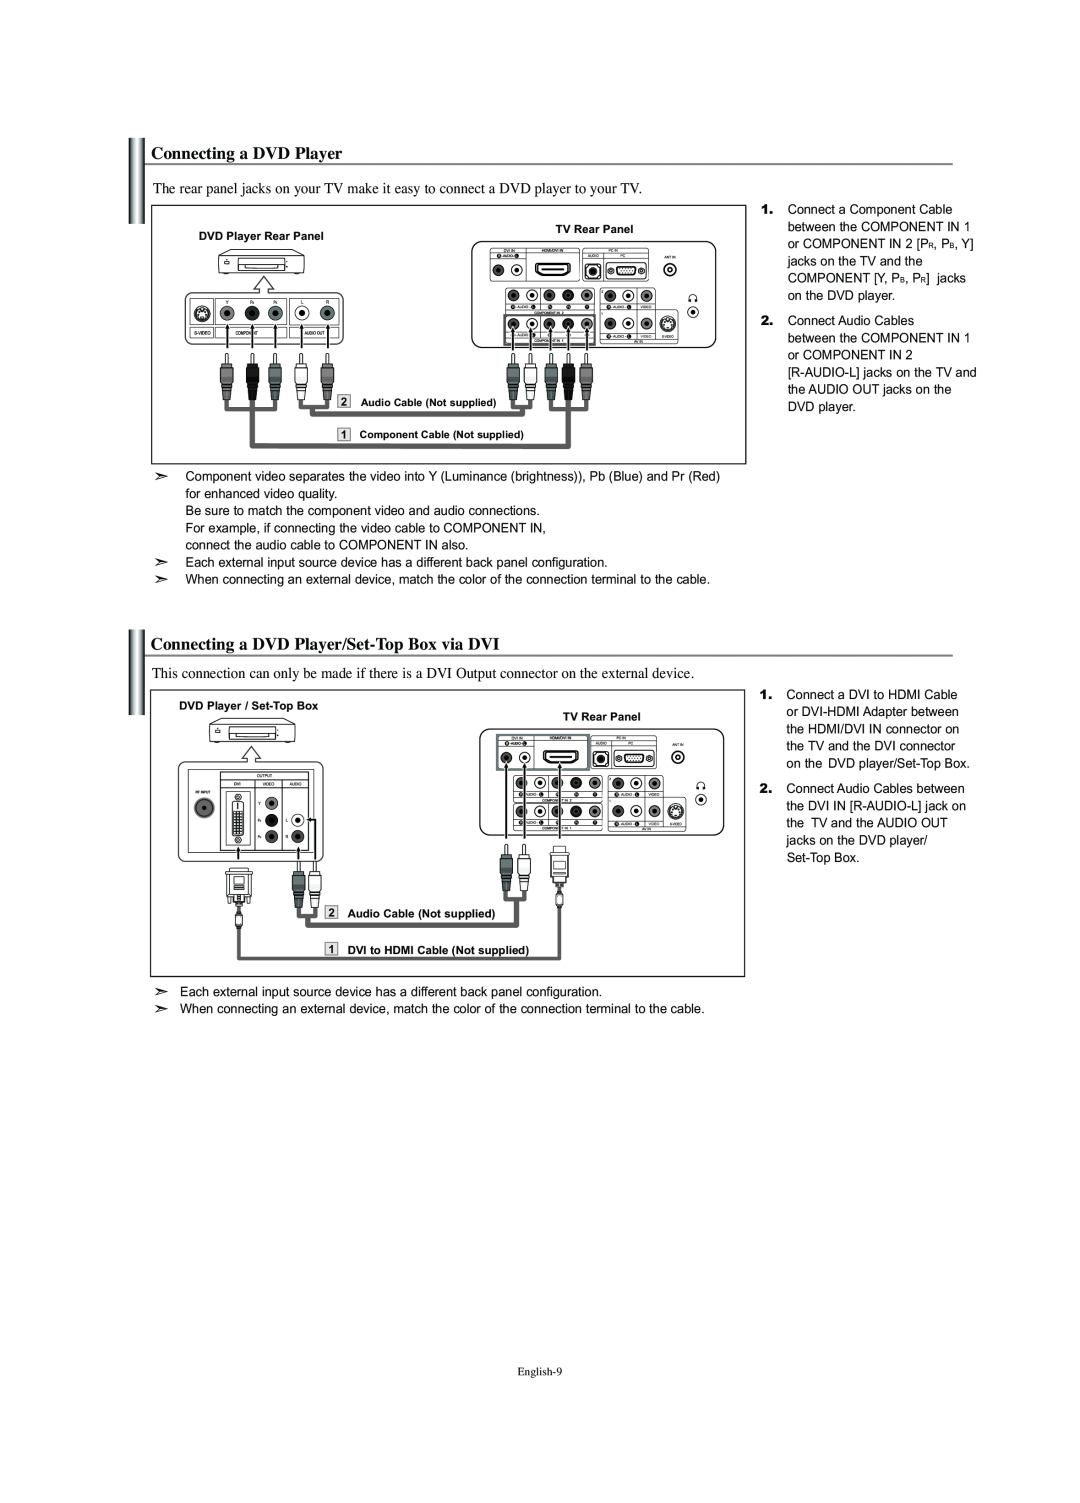 Samsung LN-S2341W manual Connecting a DVD Player/Set-Top Box via DVI, DVD Player Rear Panel, TV Rear Panel 